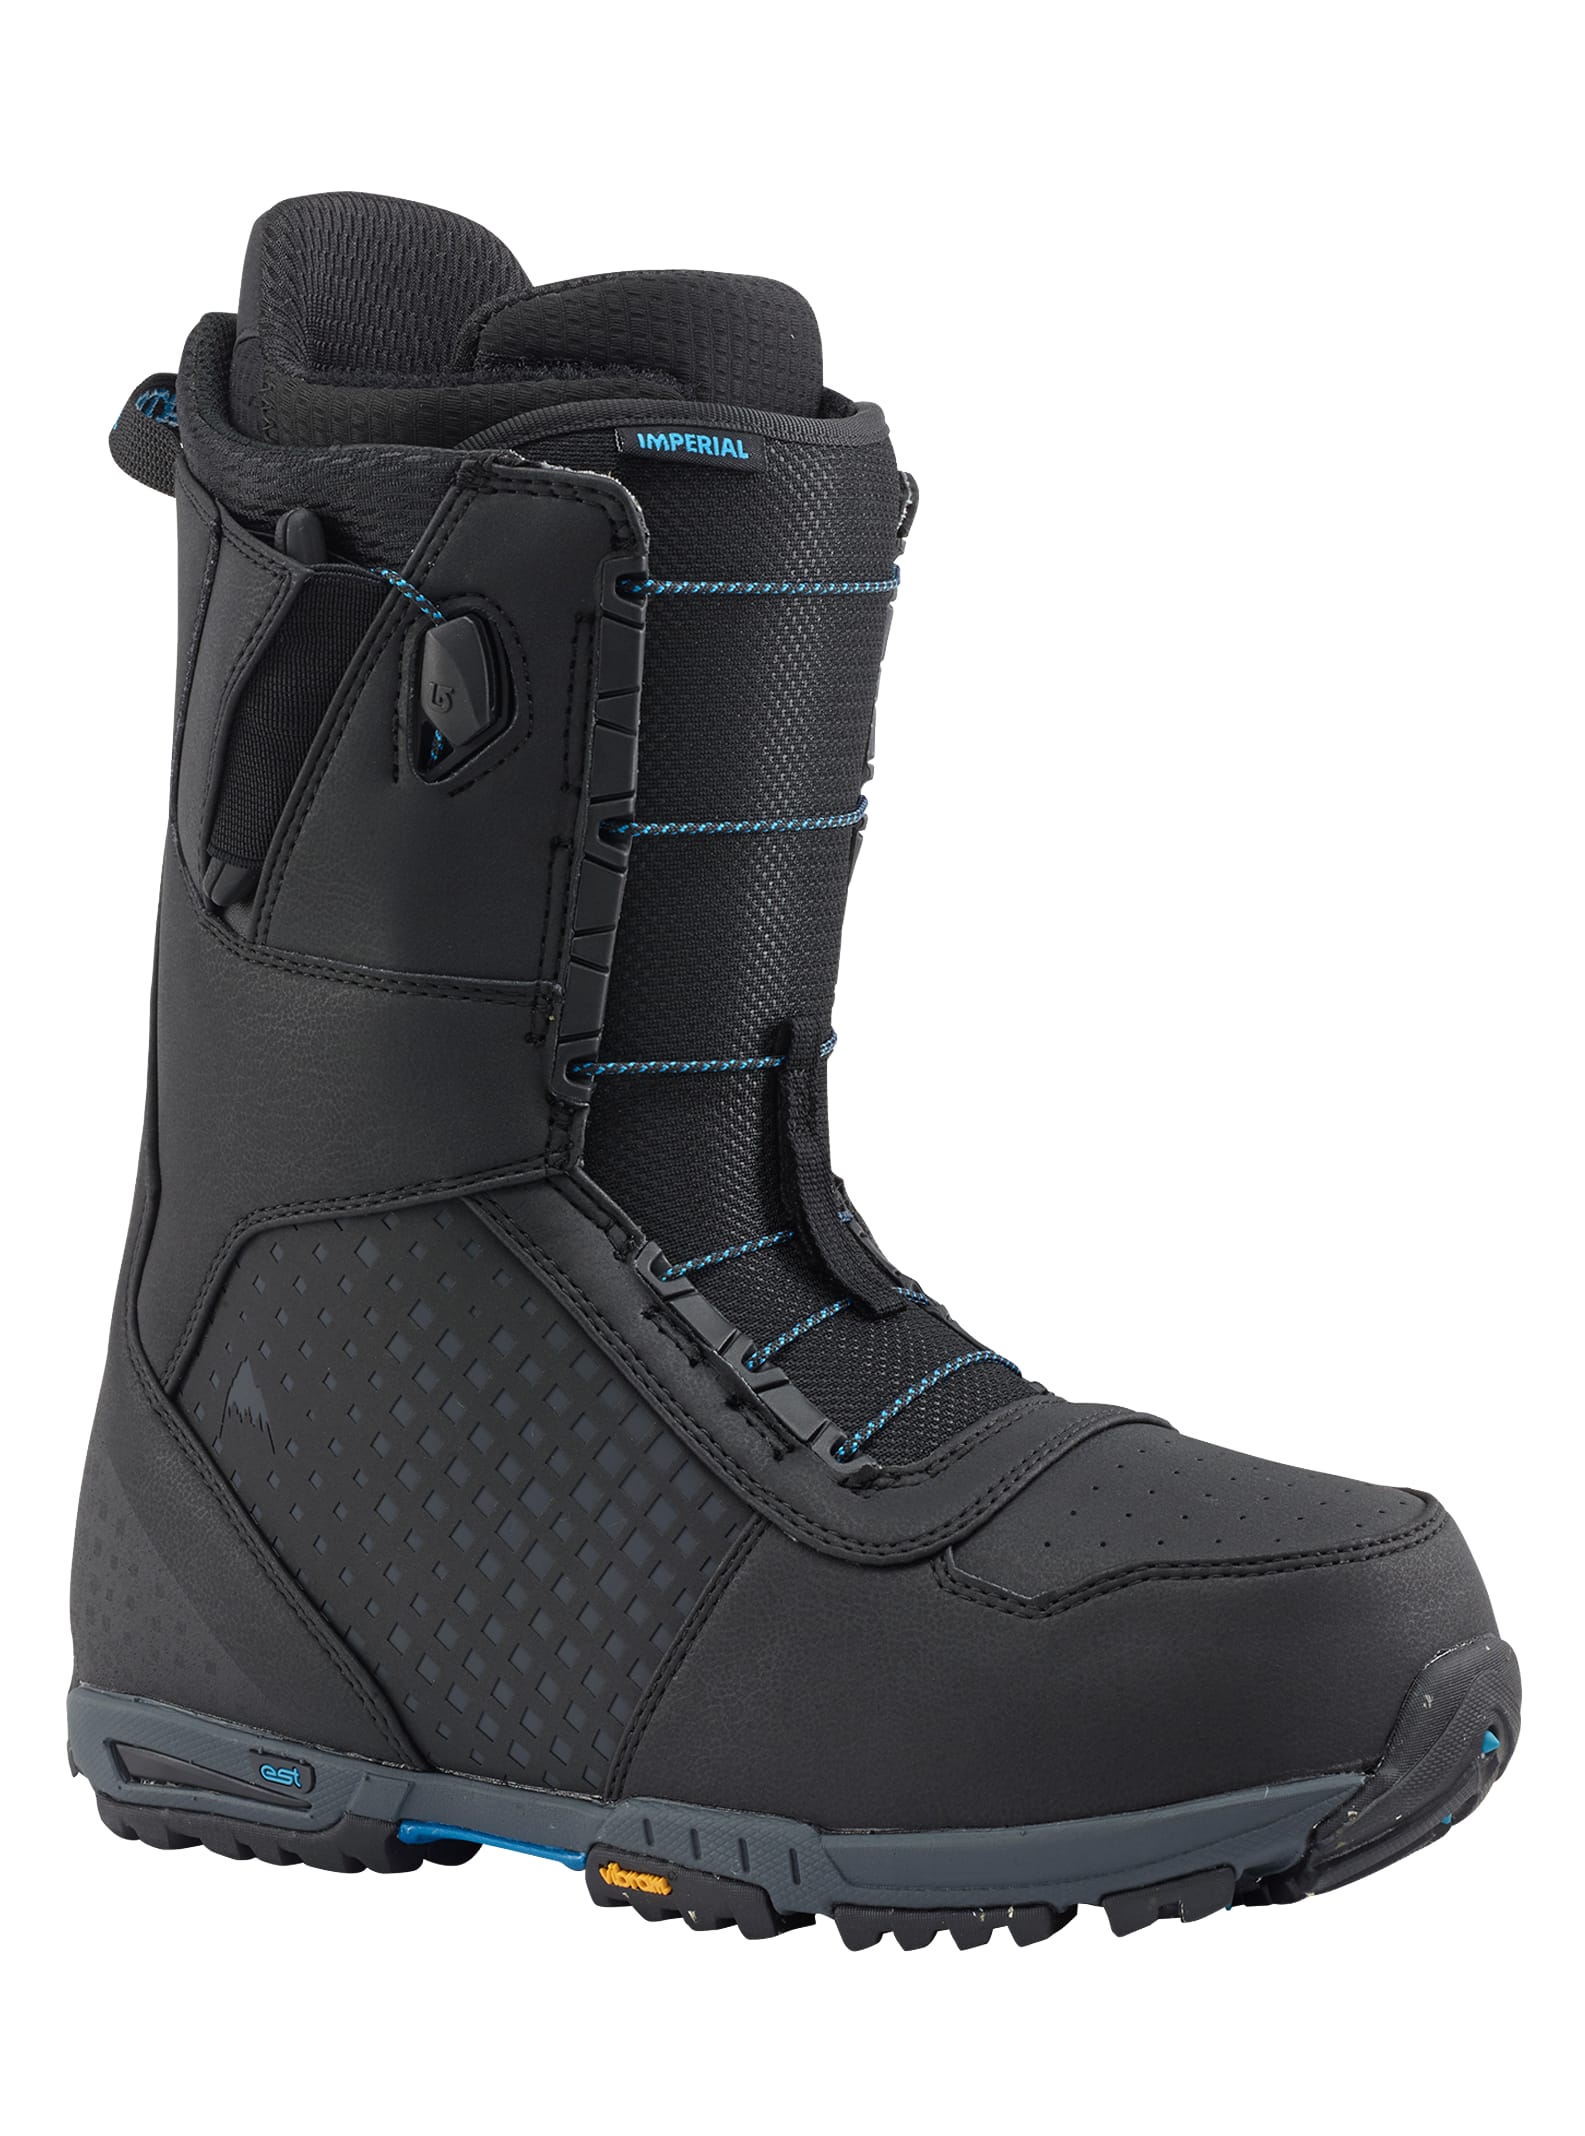 Burton - Boots de snowboard Imperial homme, Black / Gray, 10